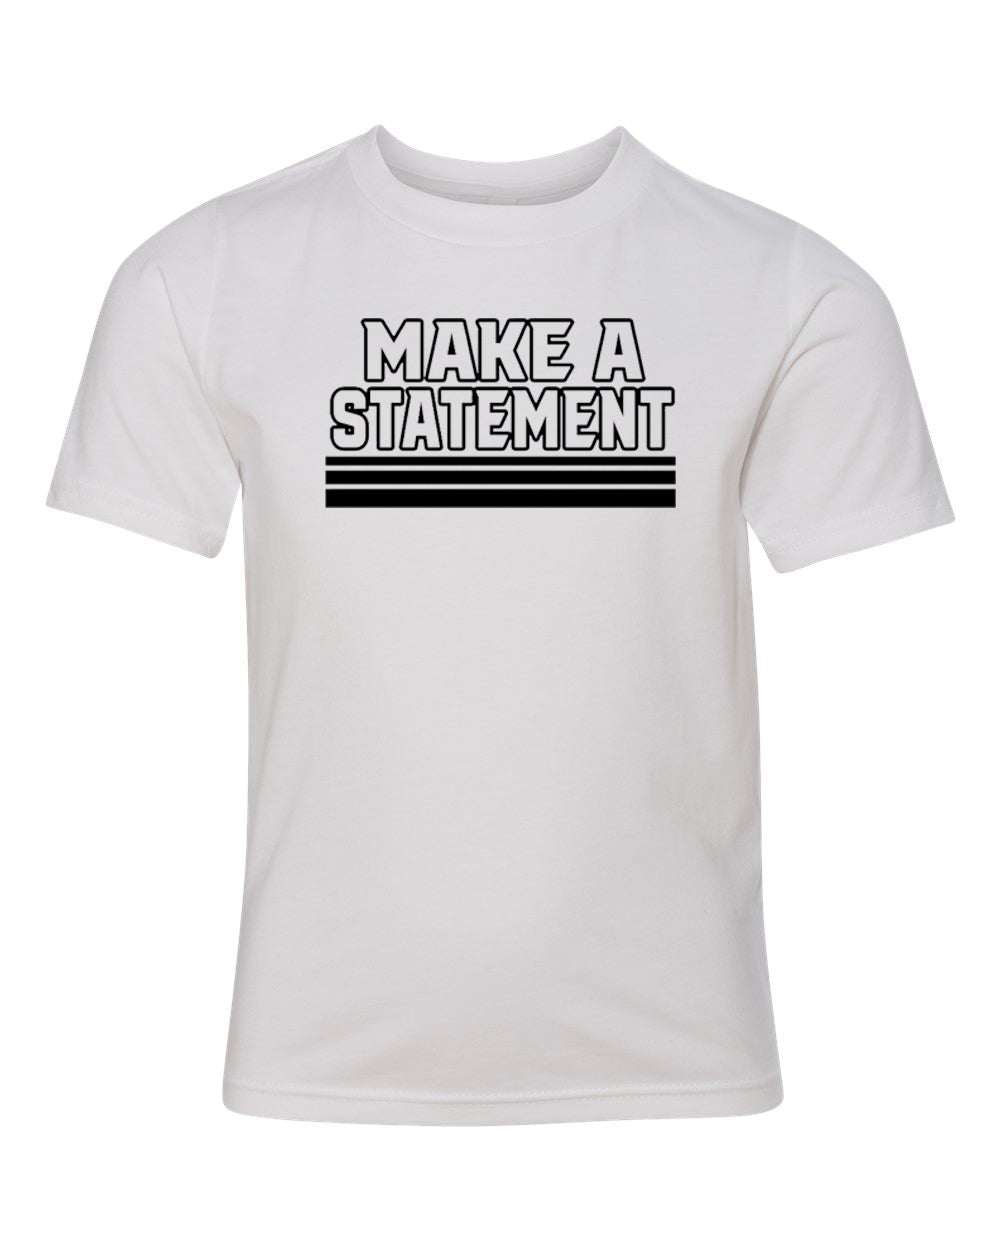 Make A Statement Youth T-Shirt White